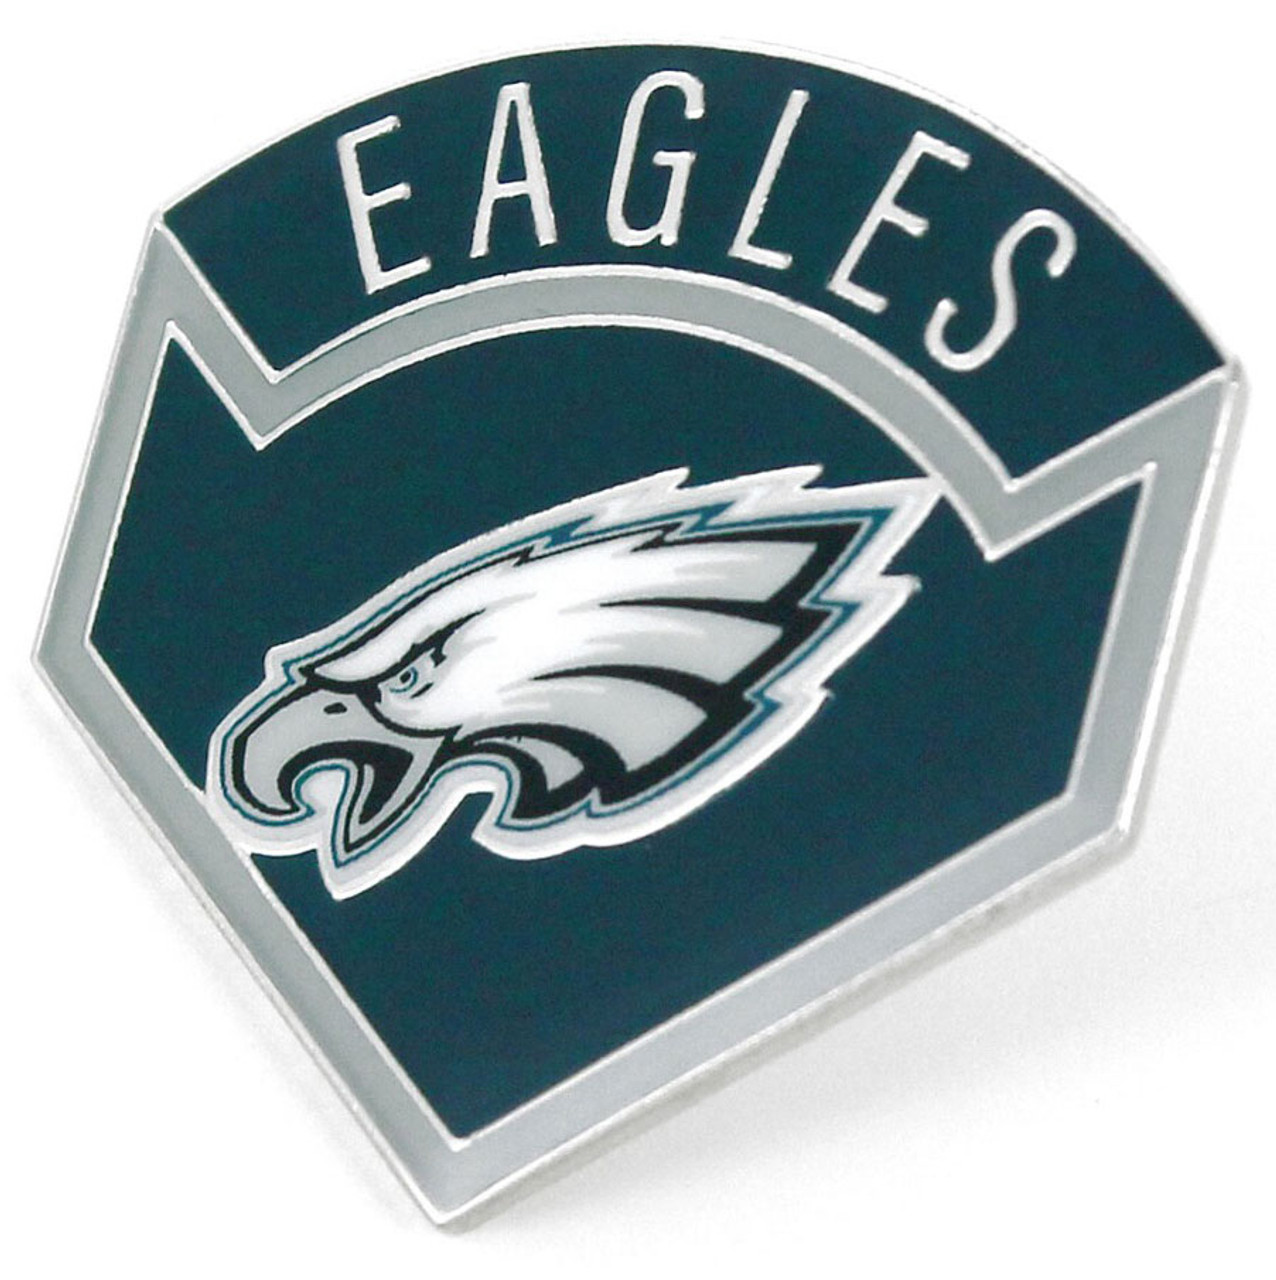 philadelphia eagles pin